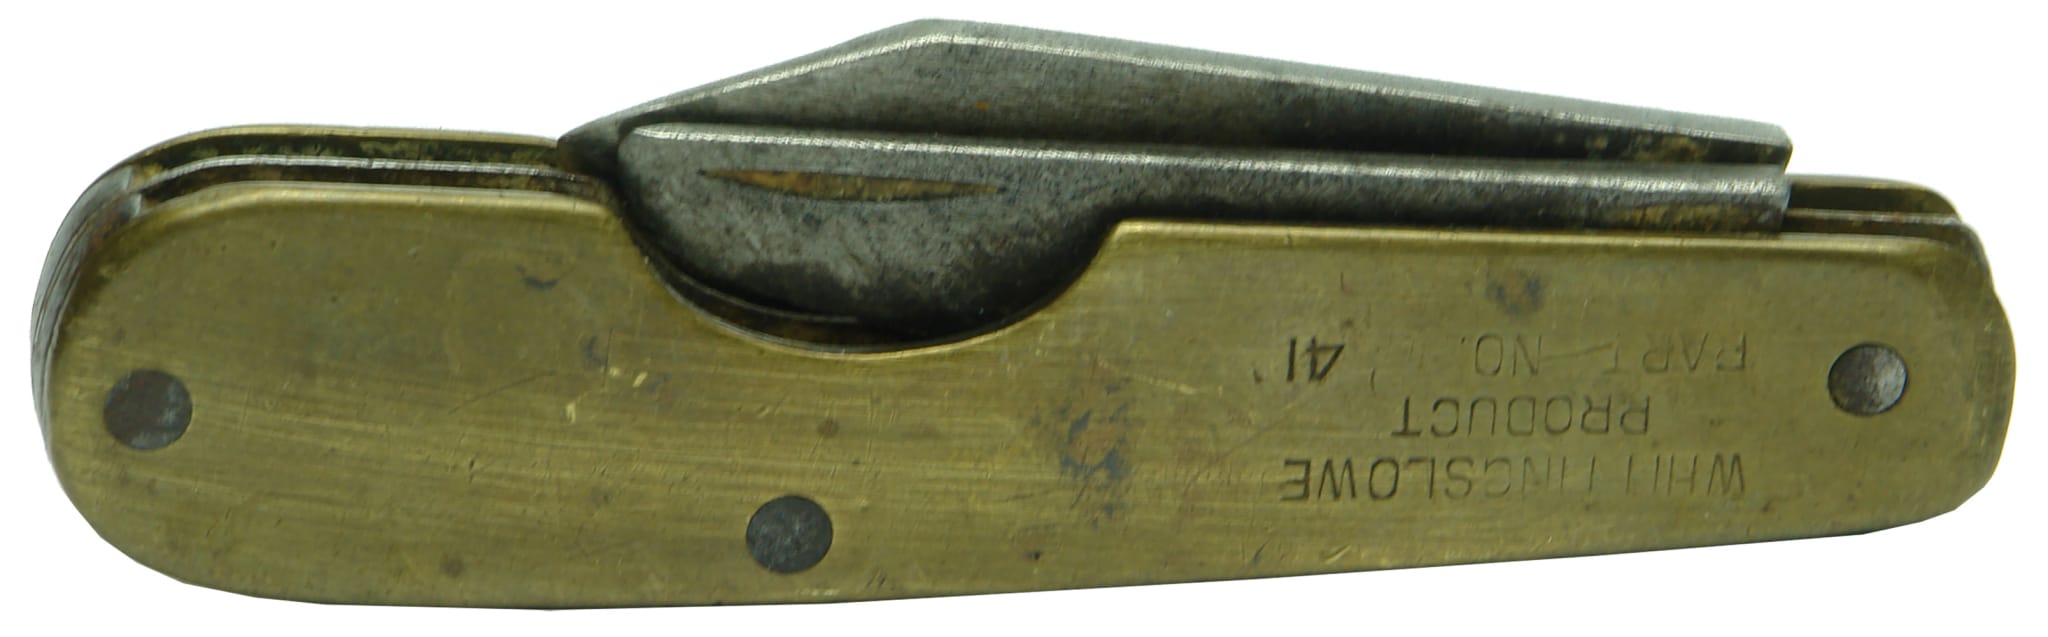 Australian Whittingslowe product part no 41 stockmans knife